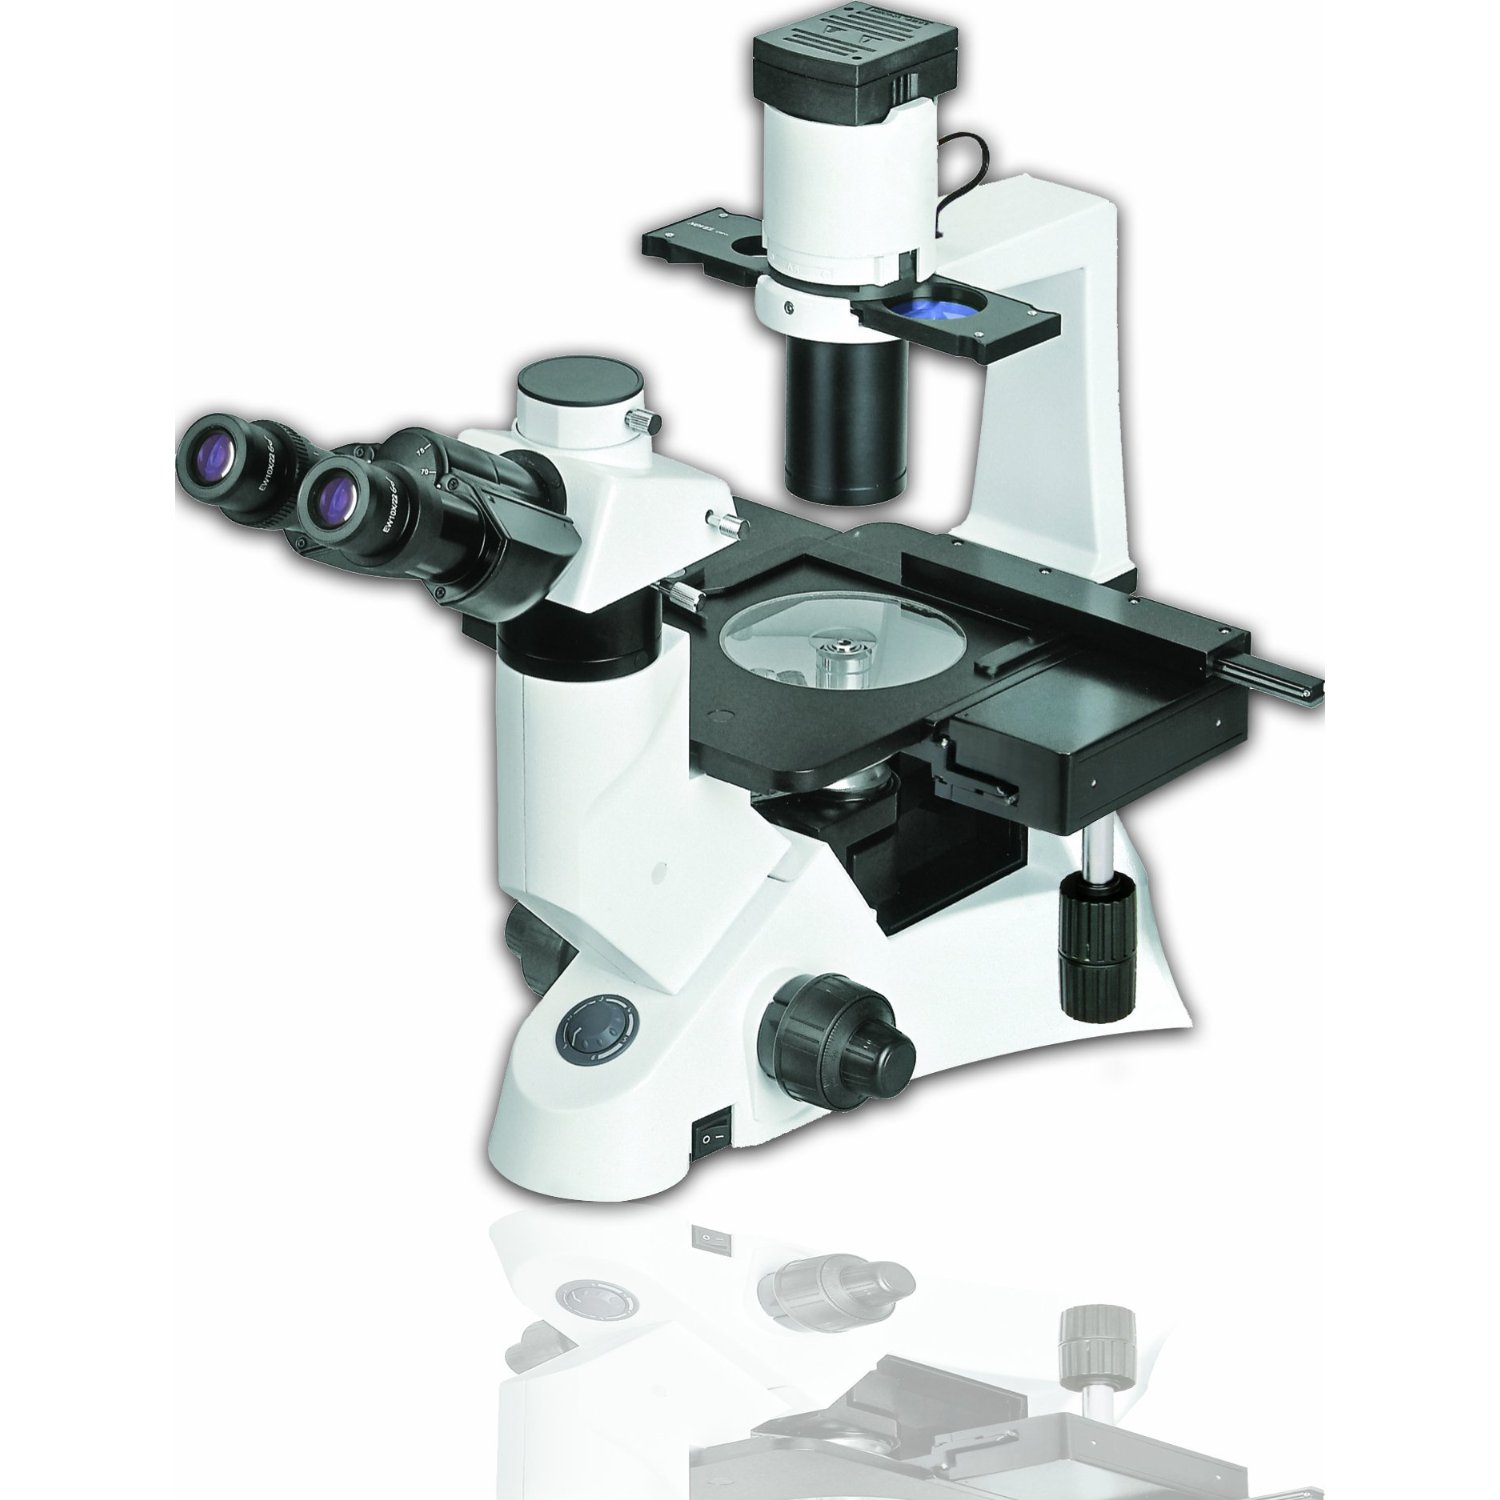 NIB—100 显微镜 倒置生物显微镜 